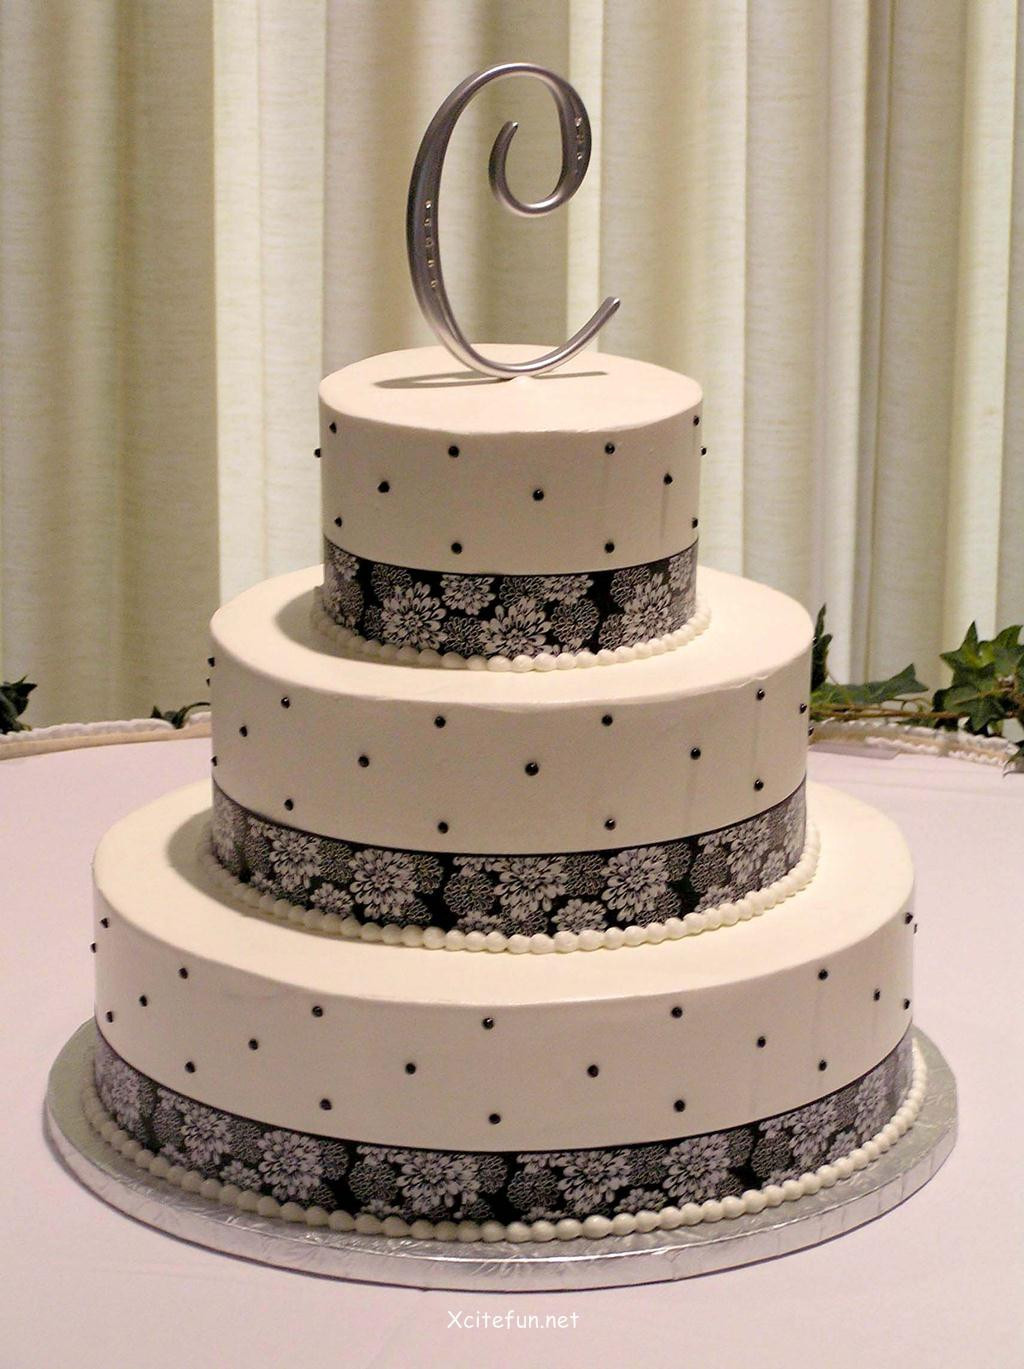 Wedding Cakes Design Ideas
 Wedding Cakes Decorating Ideas XciteFun